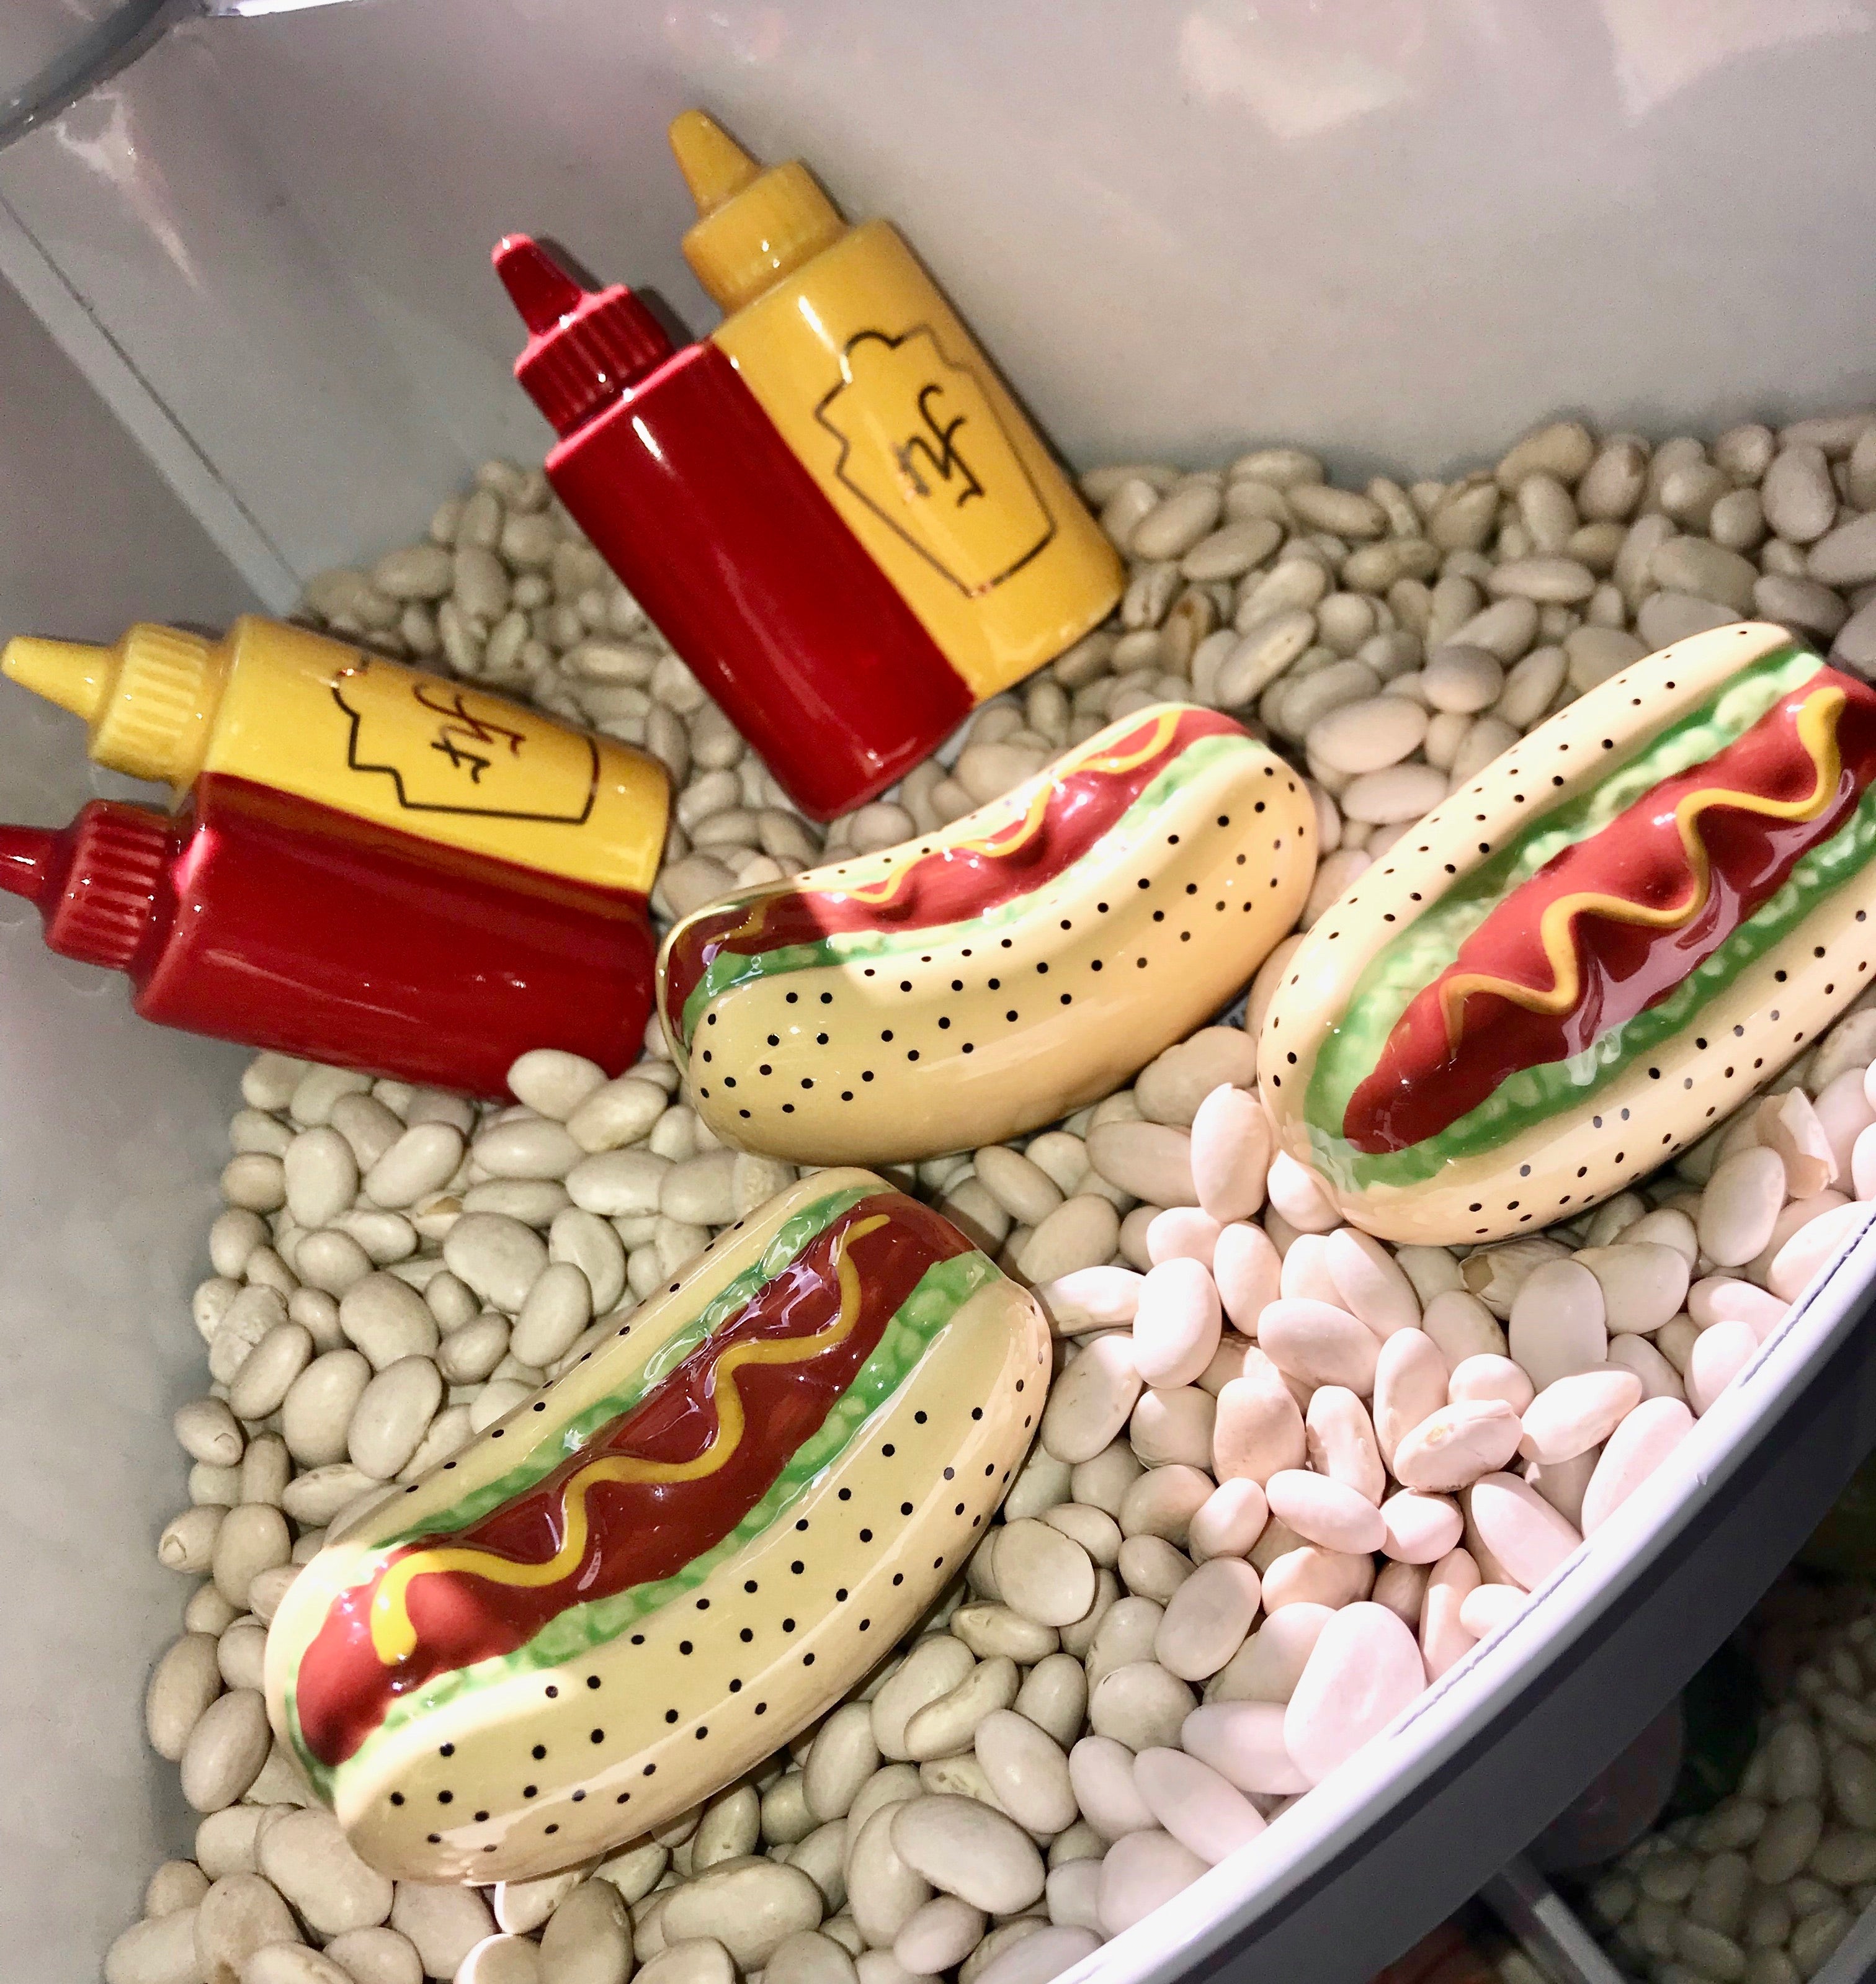 Nora Fleming Main Squeeze (Ketchup & Mustard) Mini